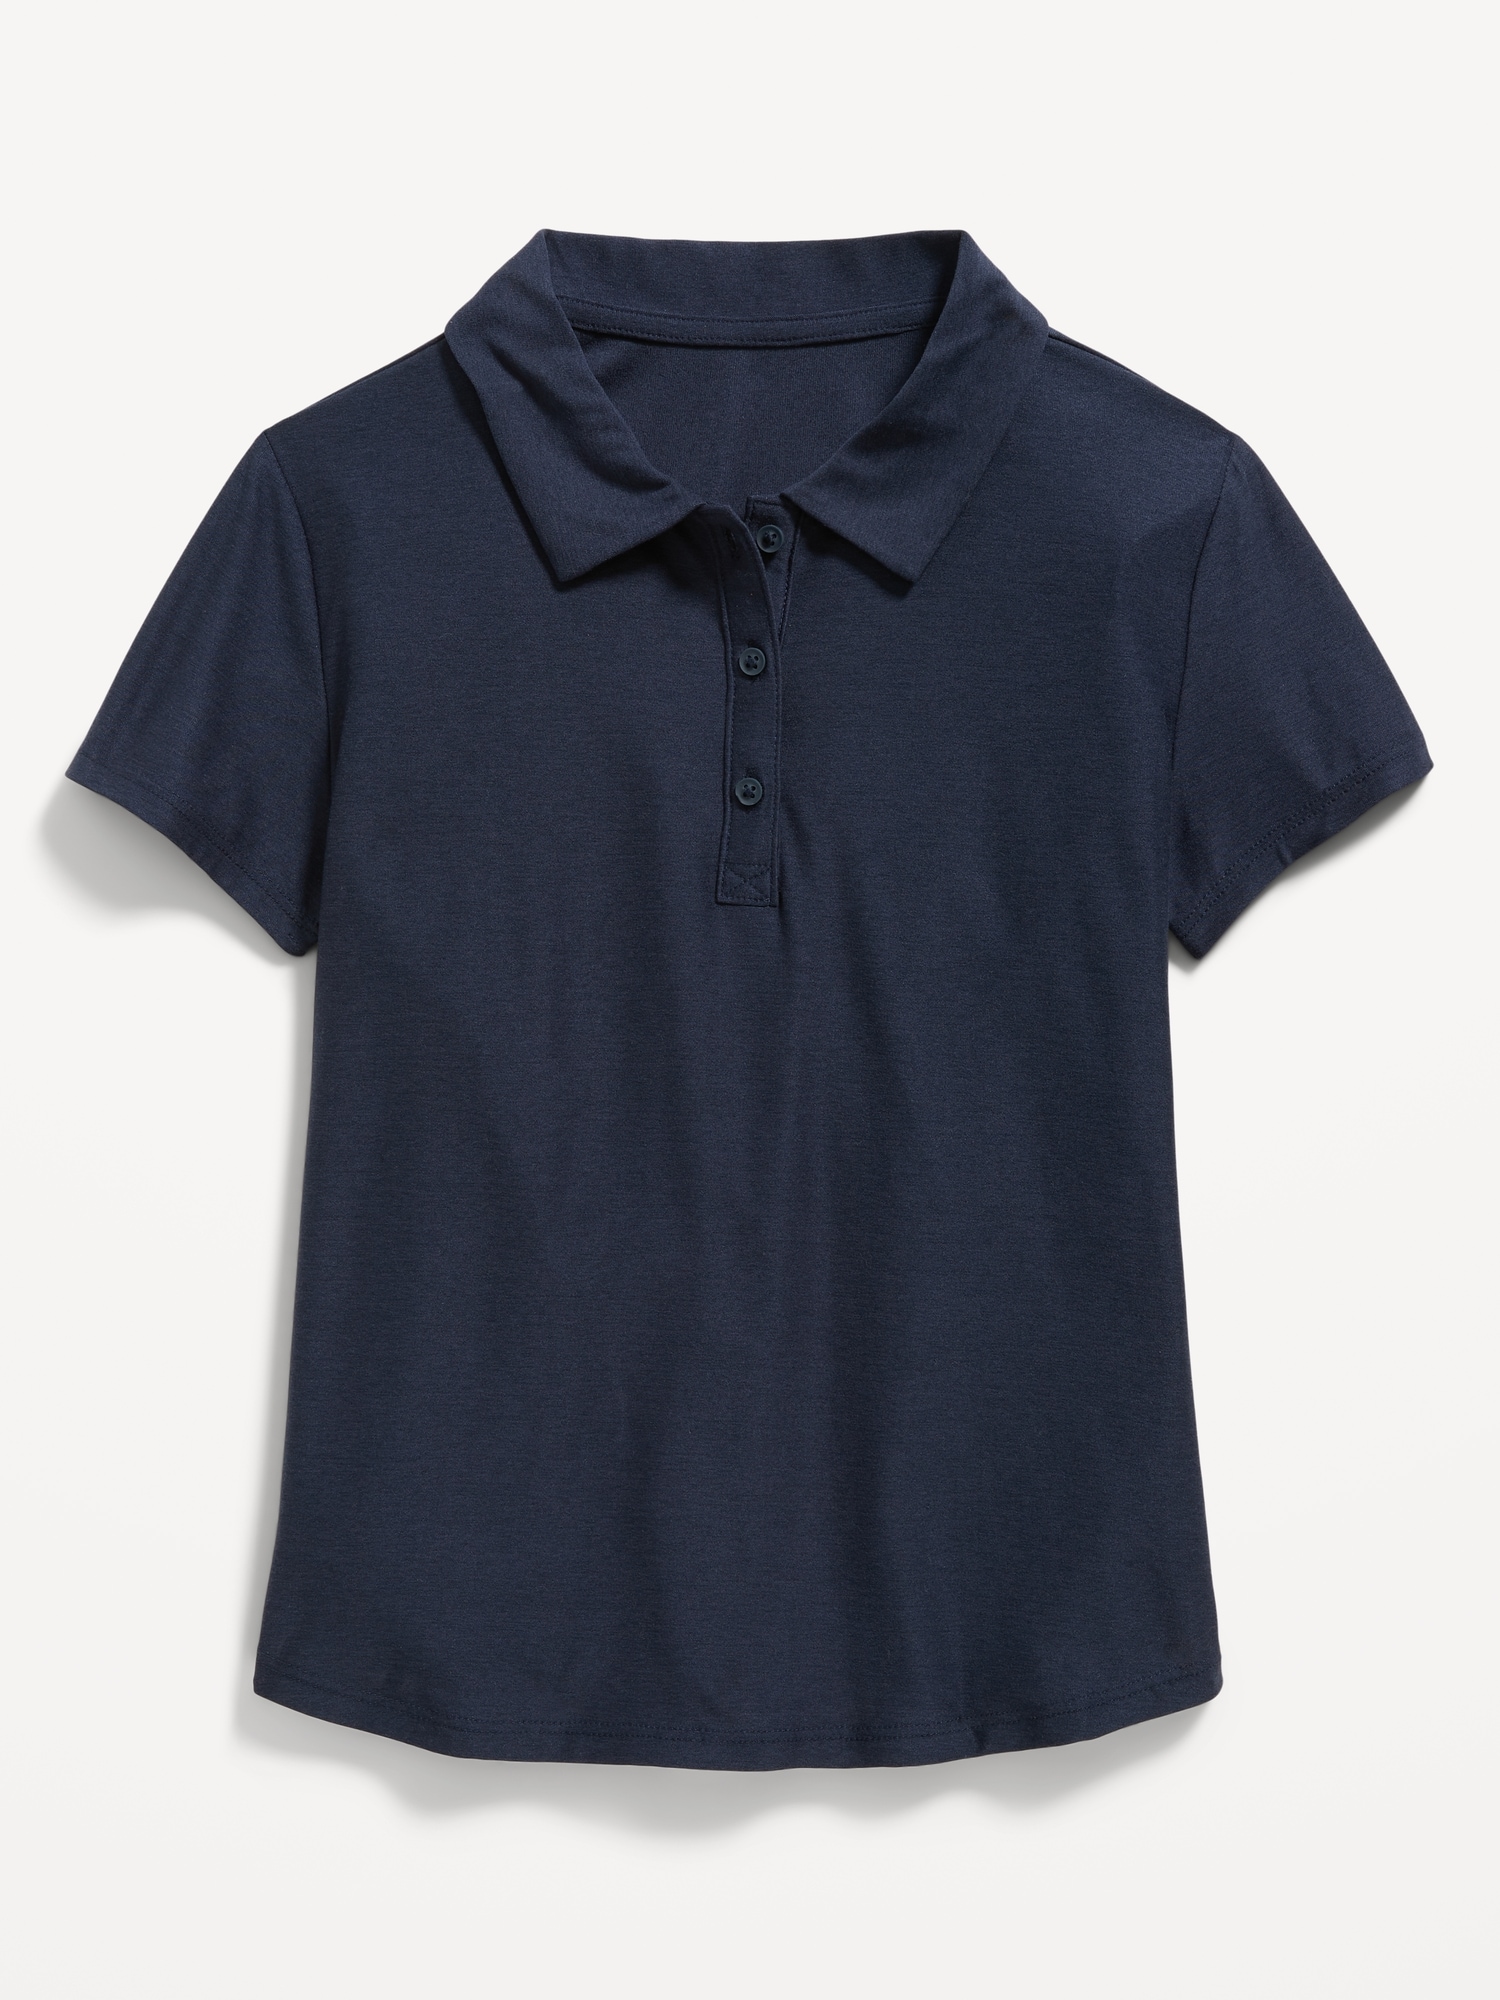 Old Navy Cloud 94 Soft School Uniform Polo Shirt for Girls blue. 1